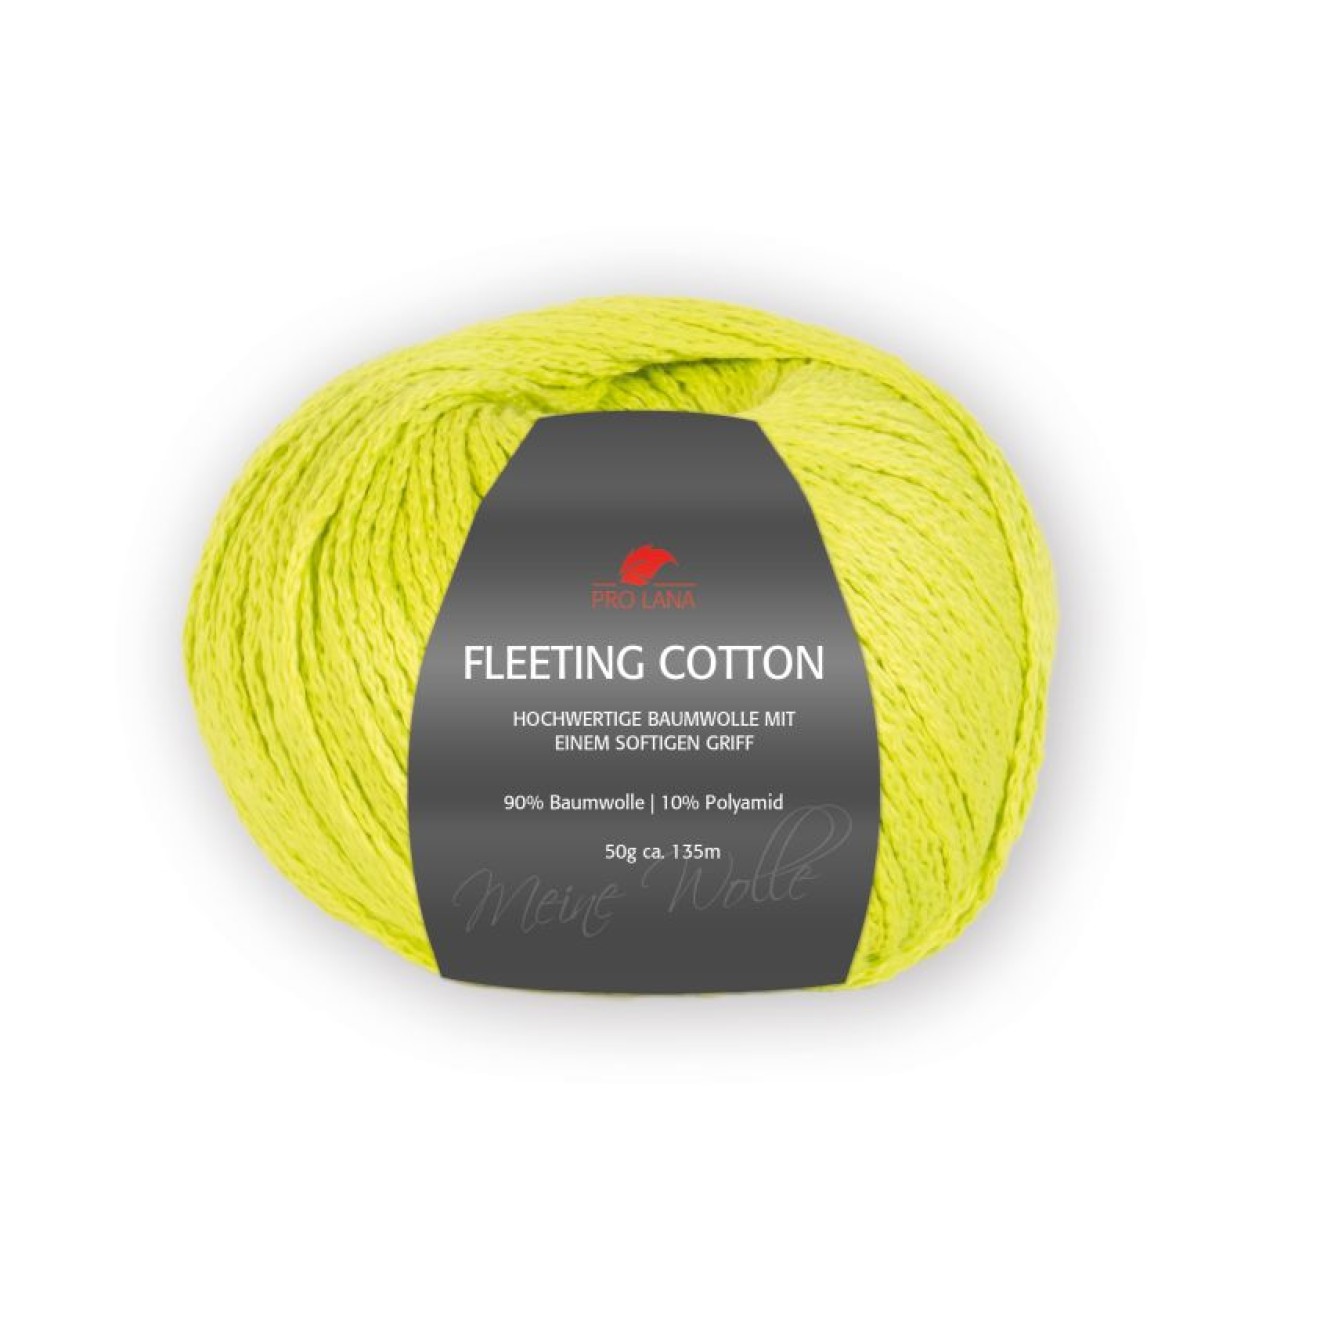 Fleeting cotton